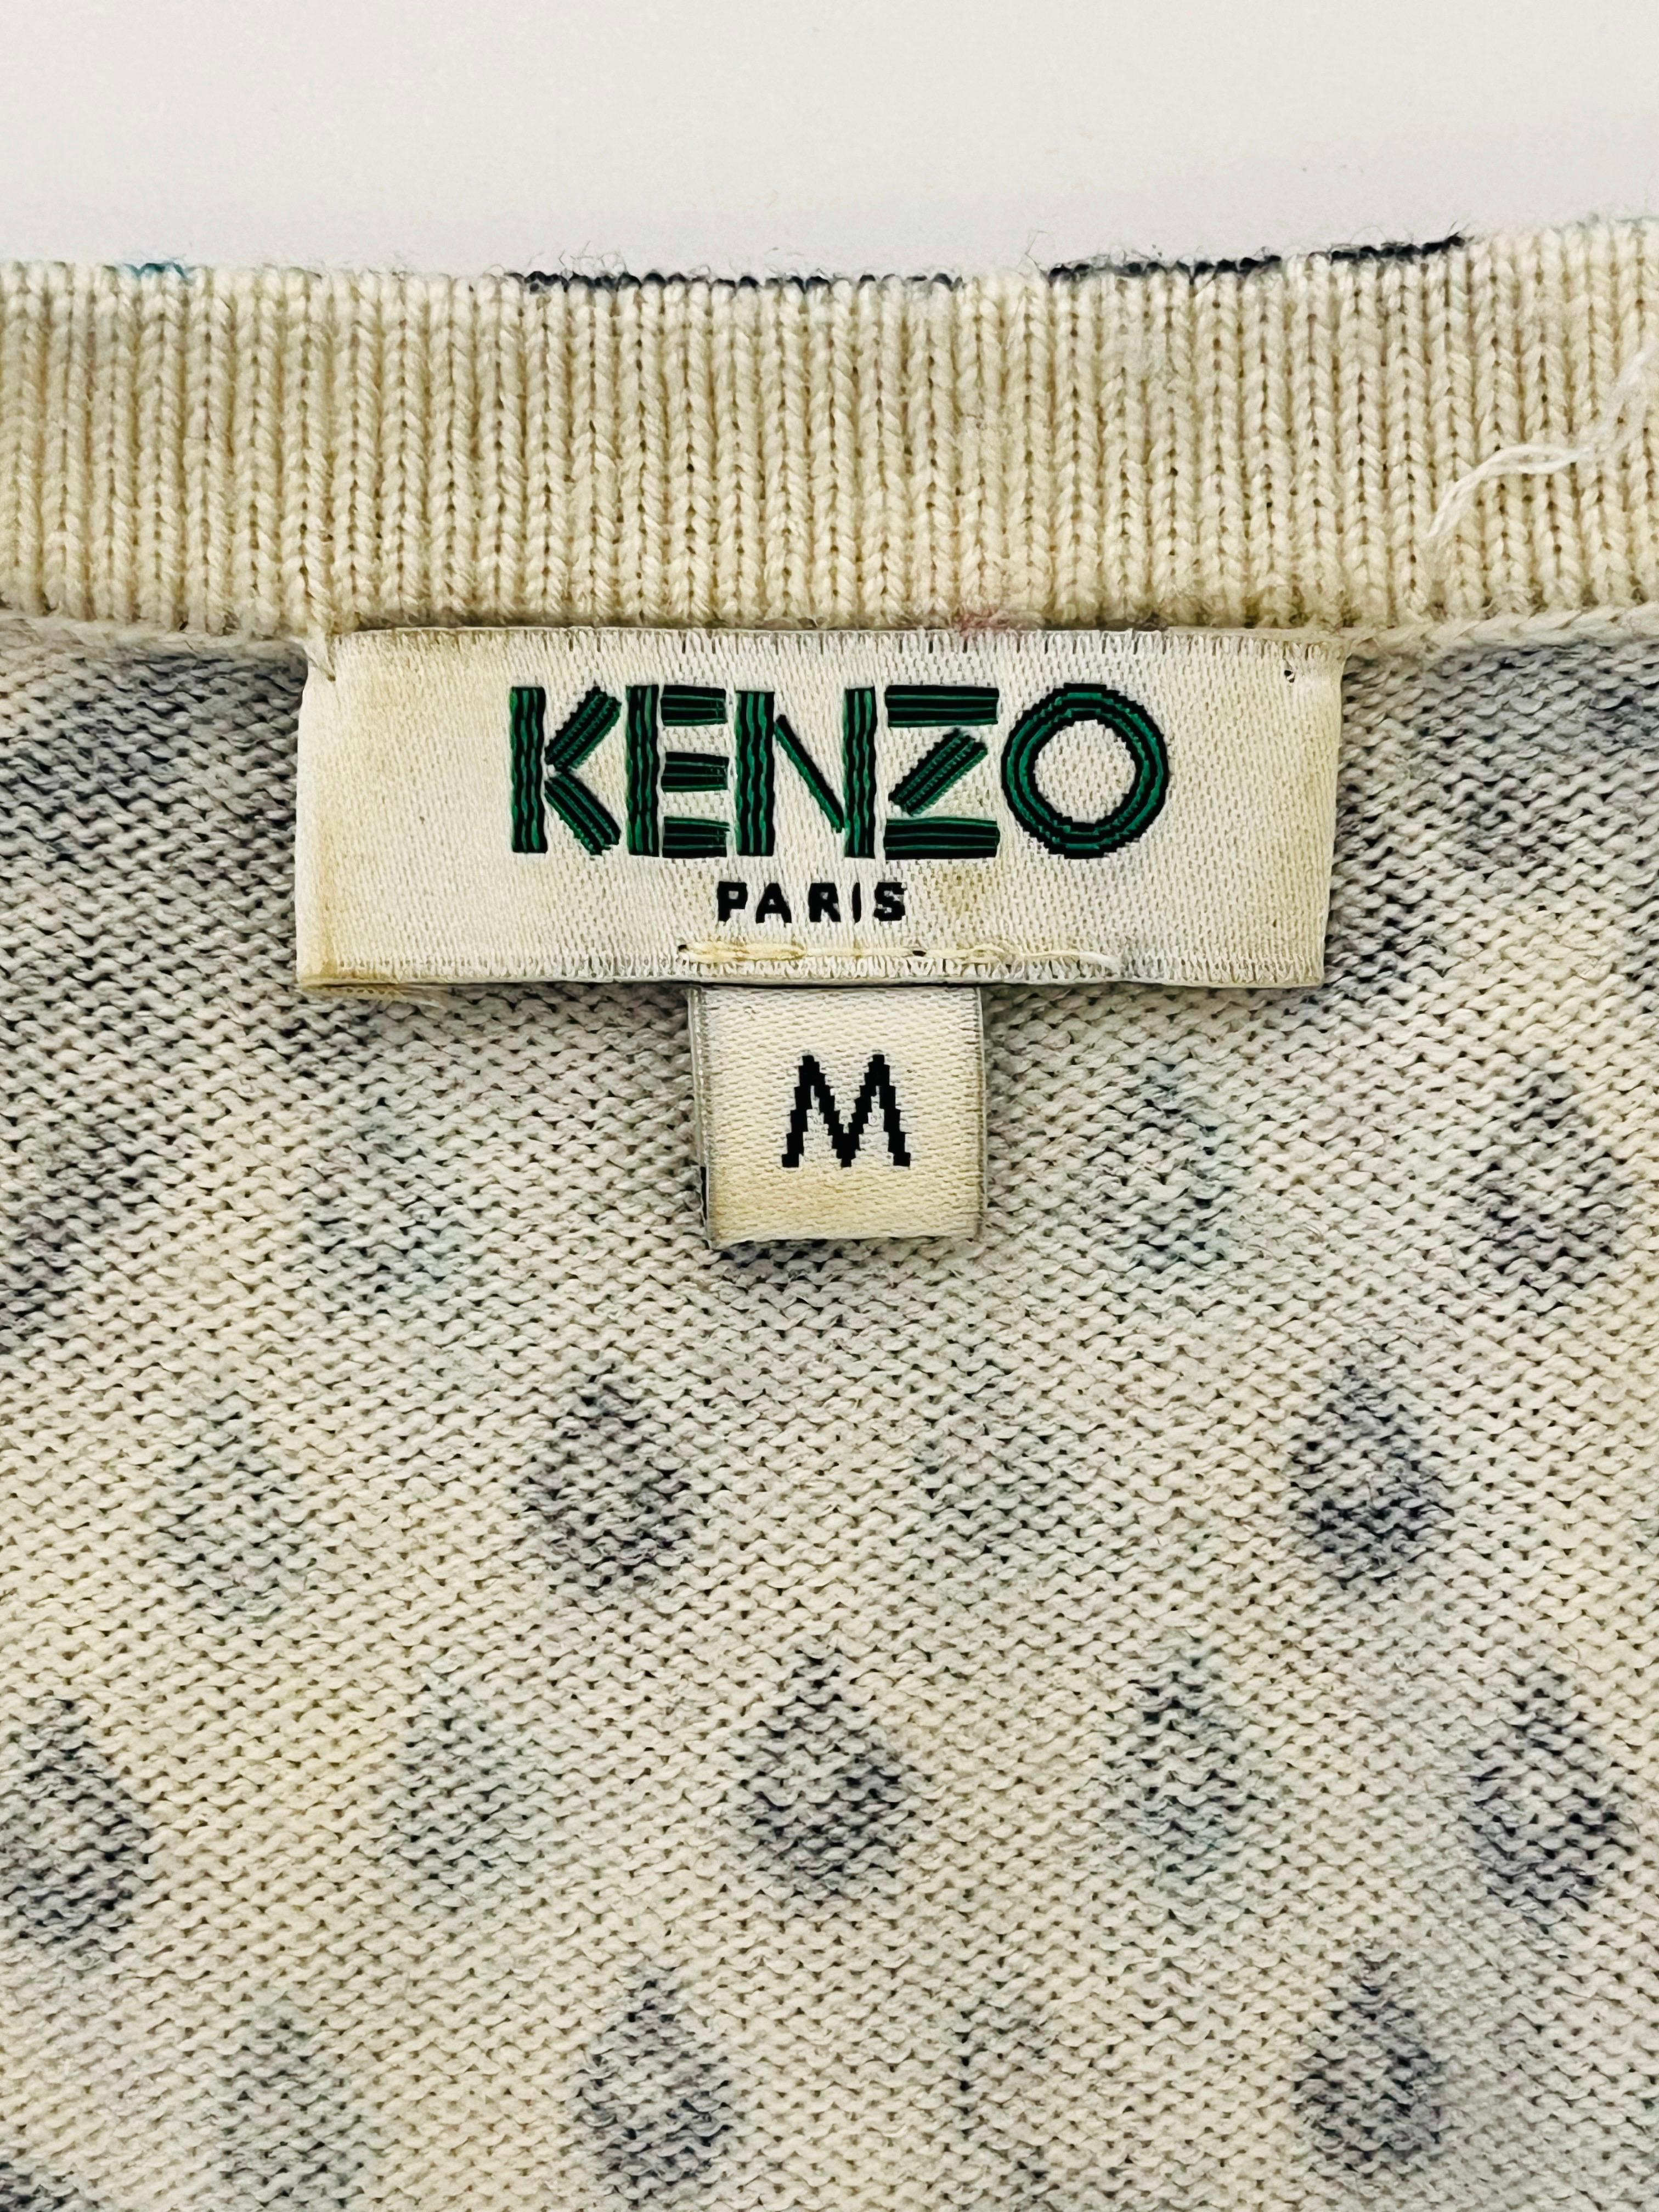 Kenzo Printed Wool Dress For Sale 1